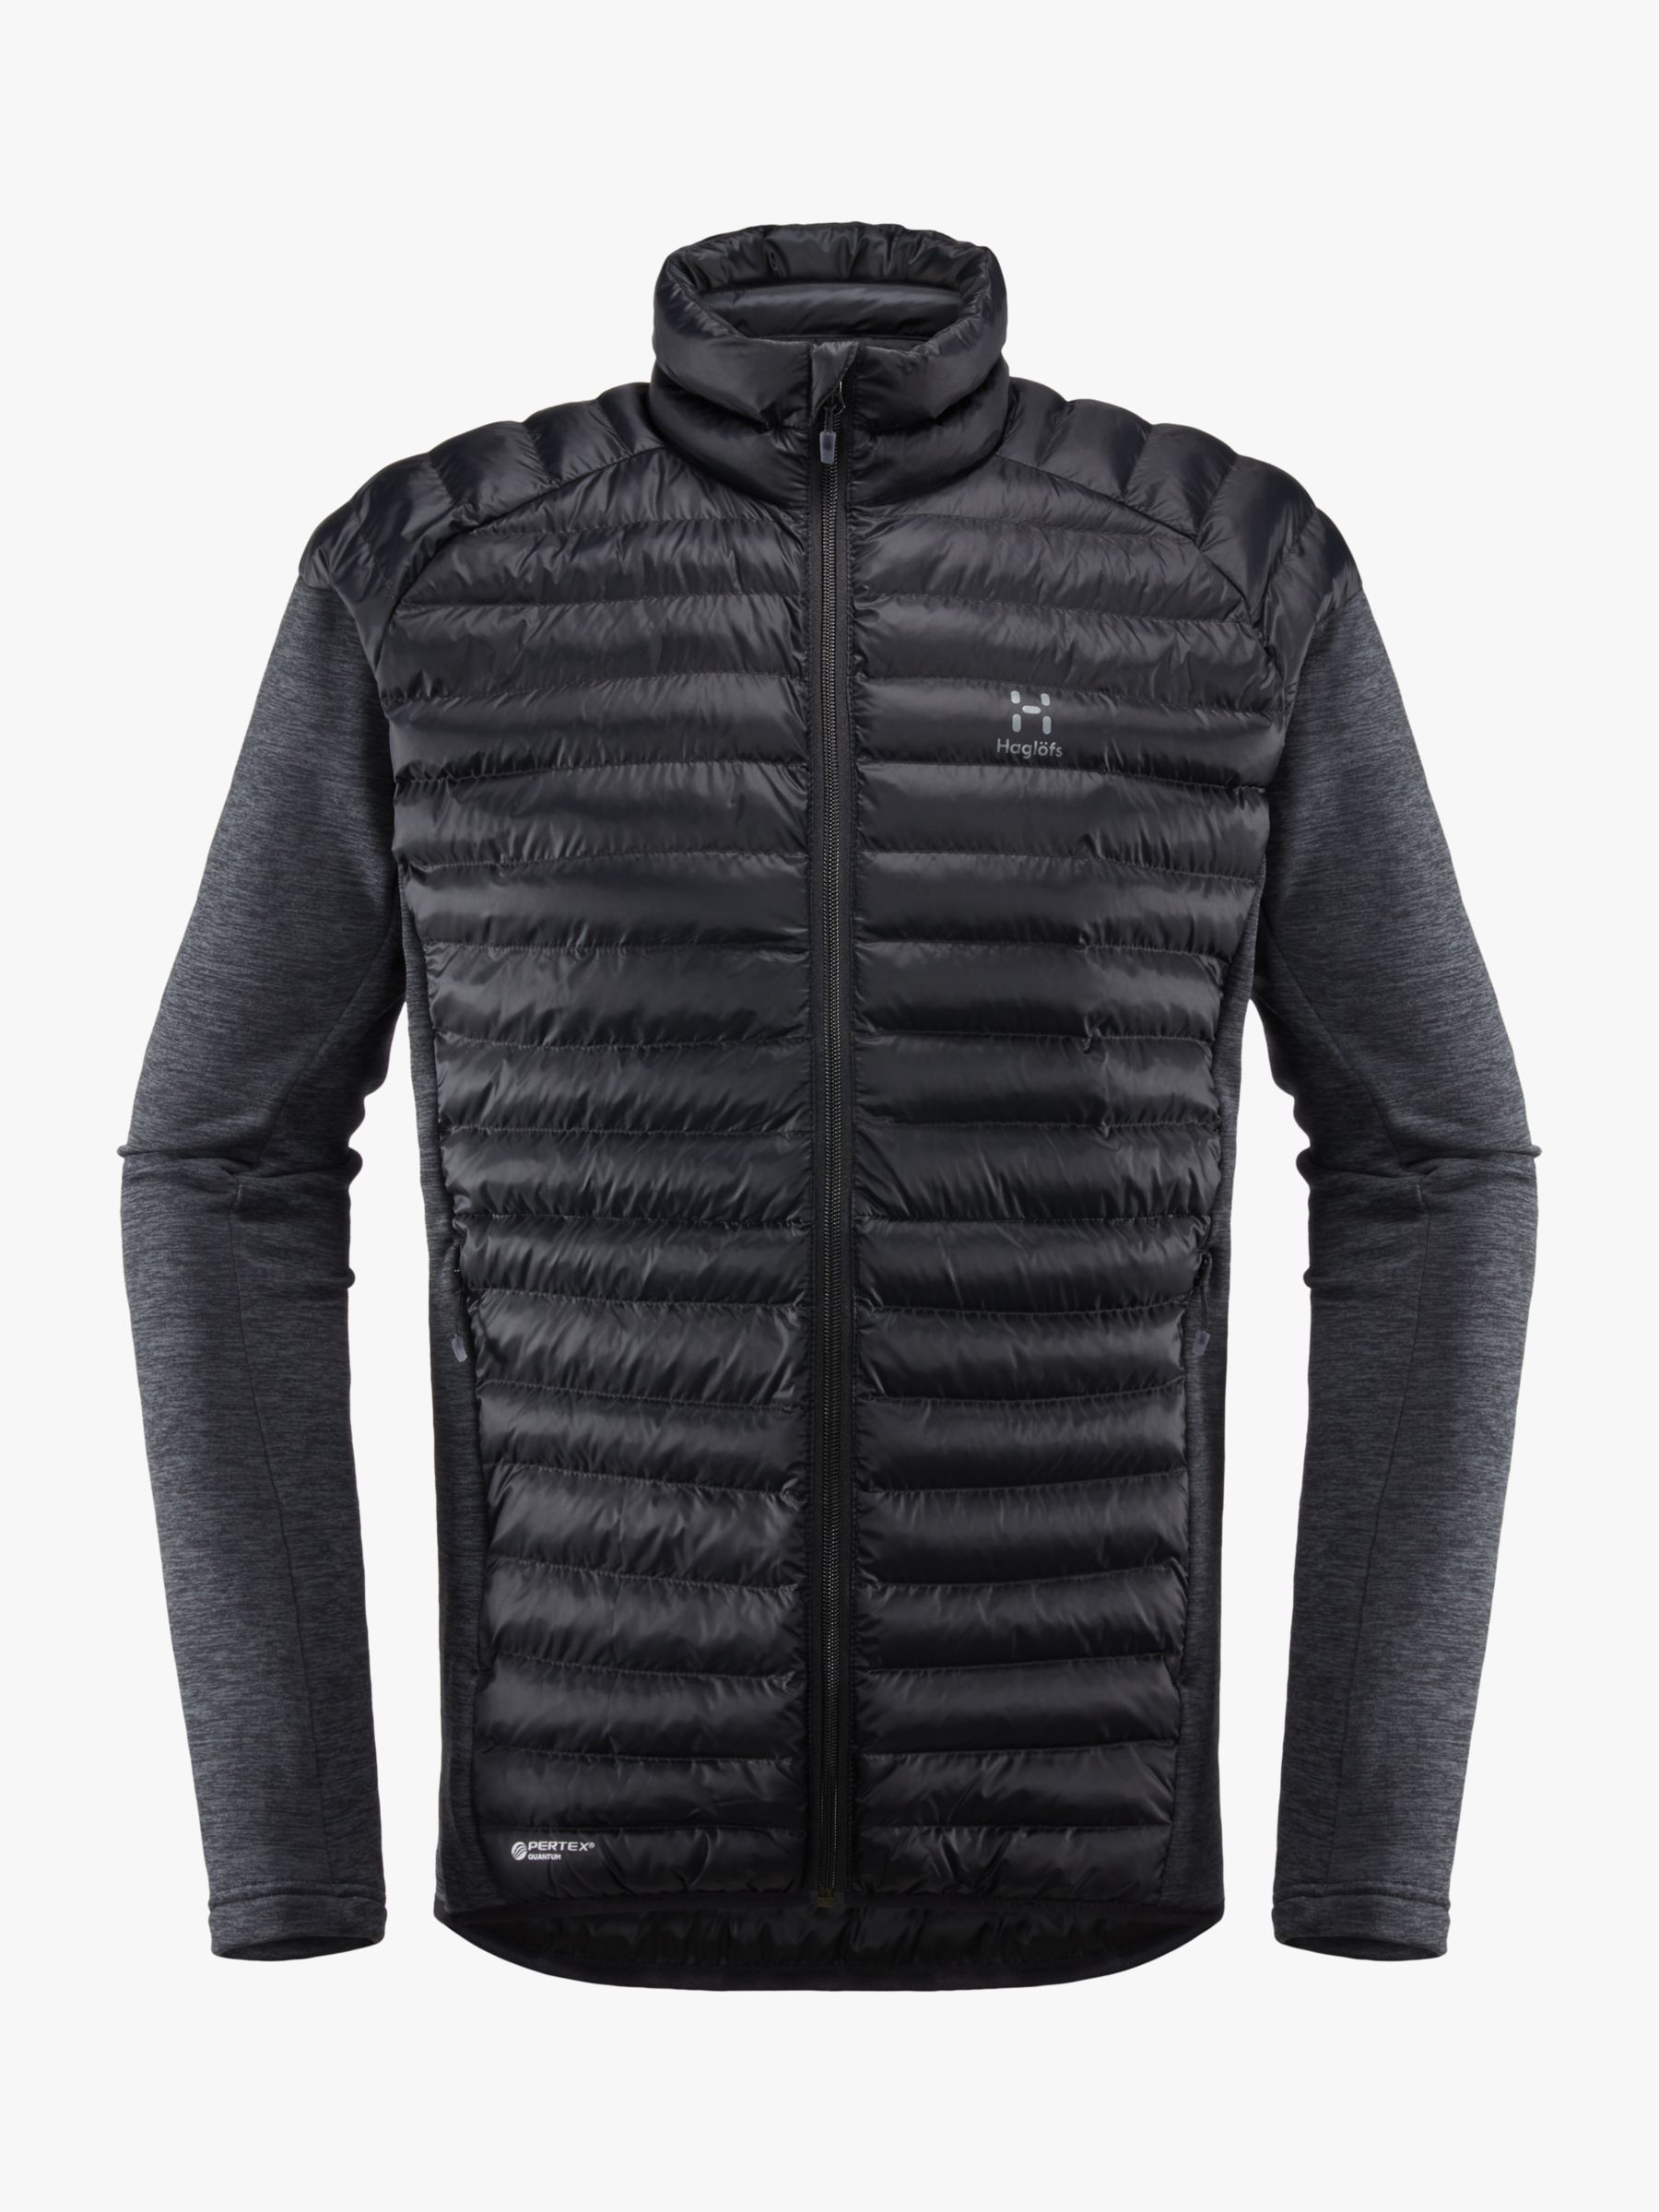 Haglöfs Mimic Hybrid Men's Insulated Jacket, True Black